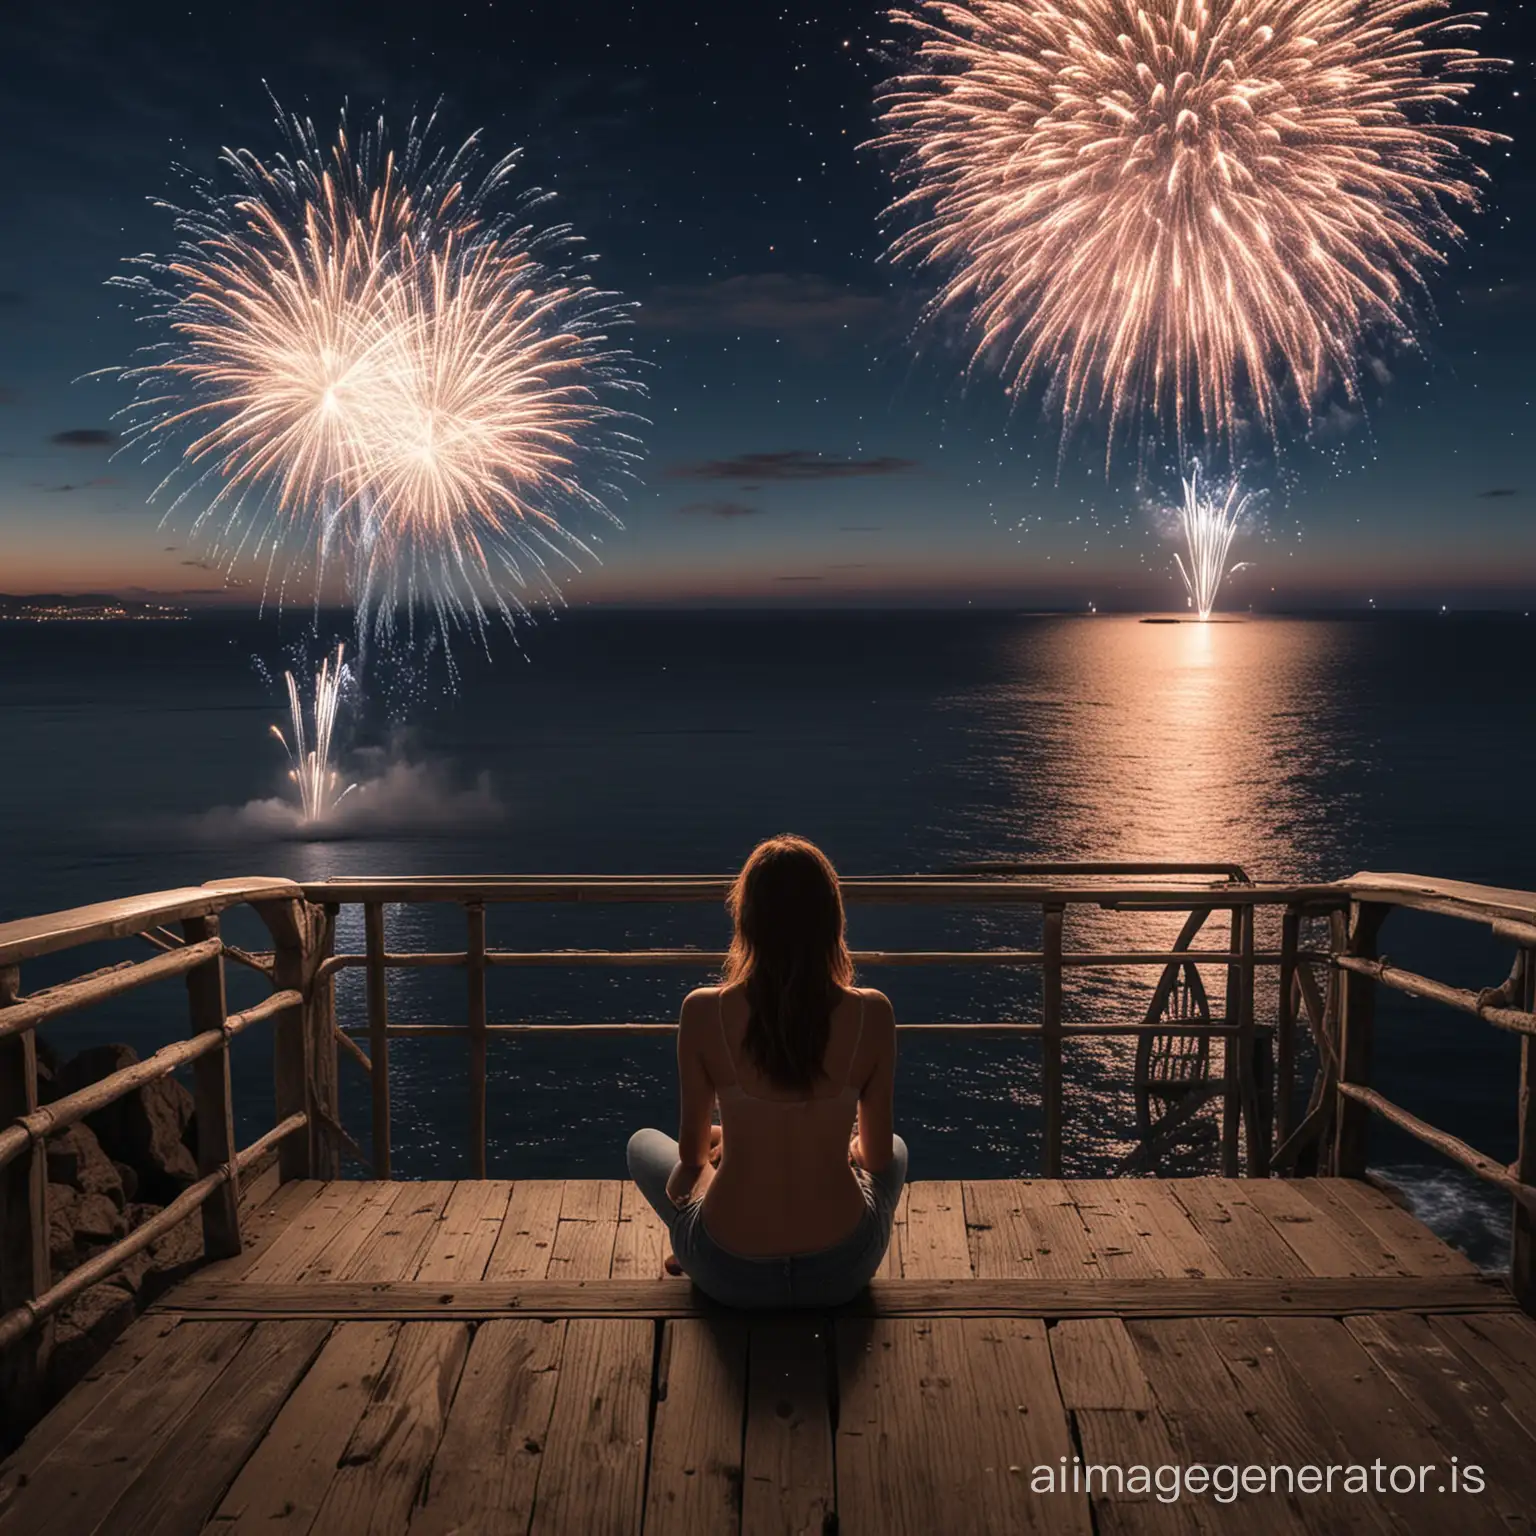 Woman-Enjoying-Sea-View-and-Fireworks-on-Bridge